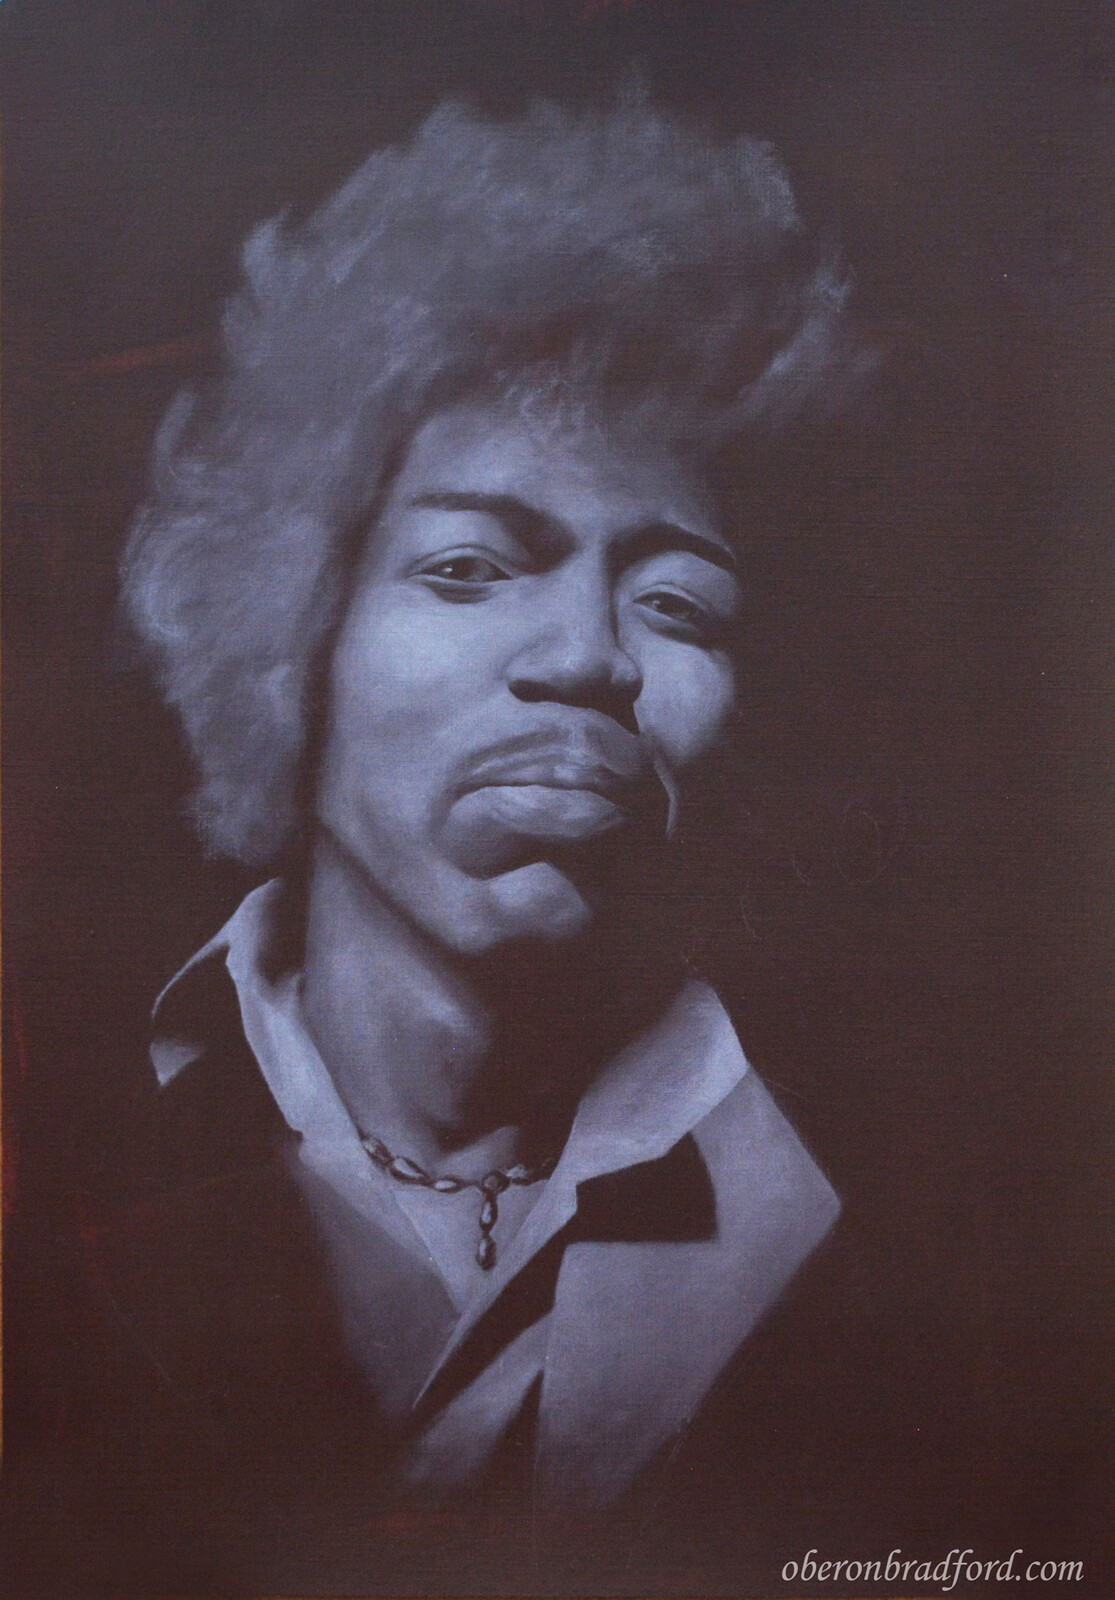 Jimi Hendrix - Vacant shadows